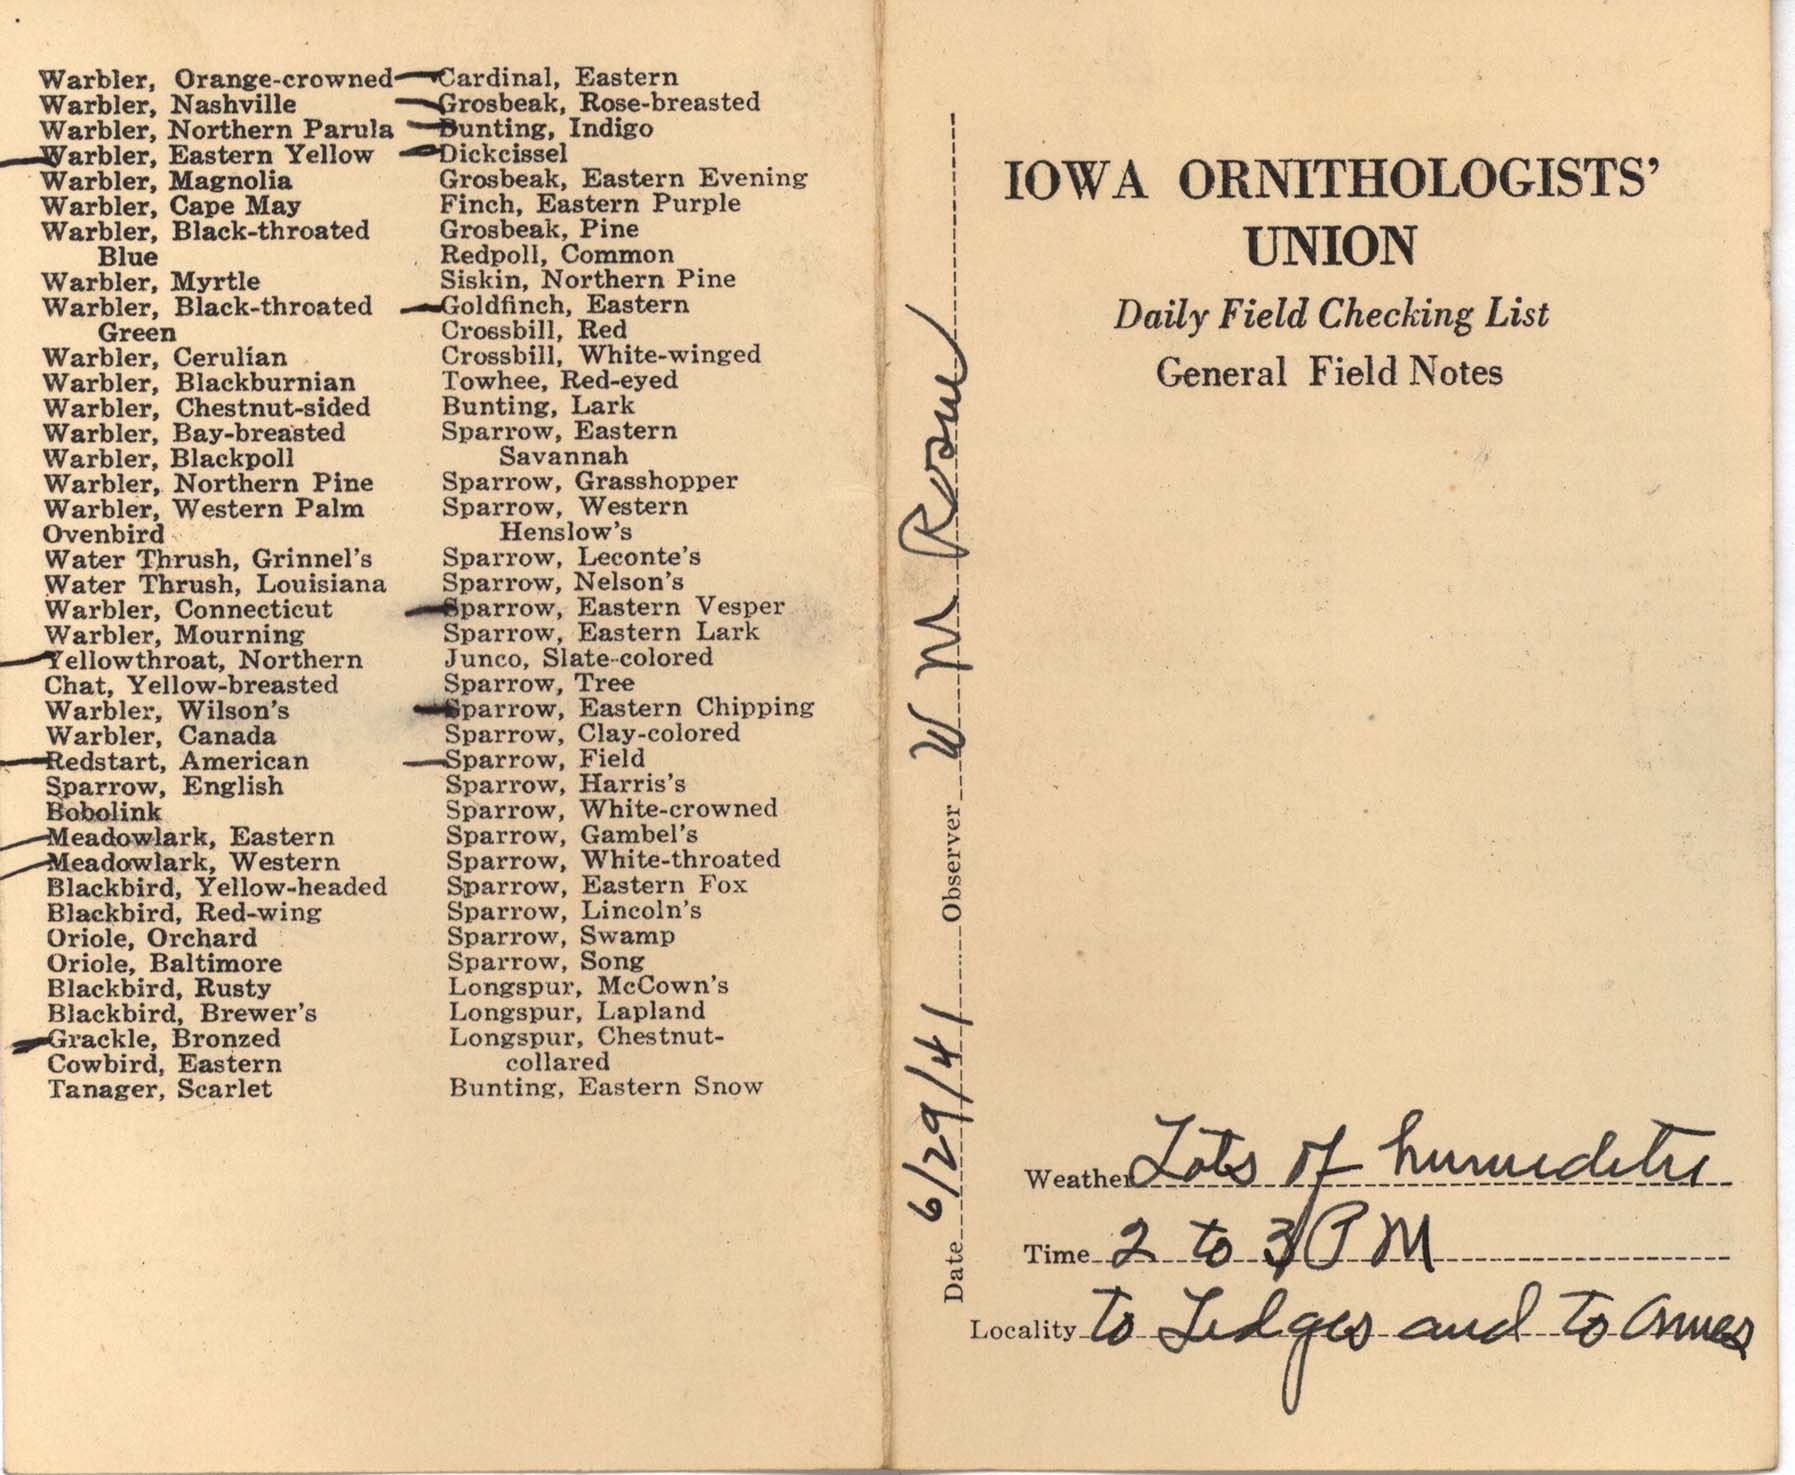 Daily field checking list by Walter Rosene, June 29, 1941